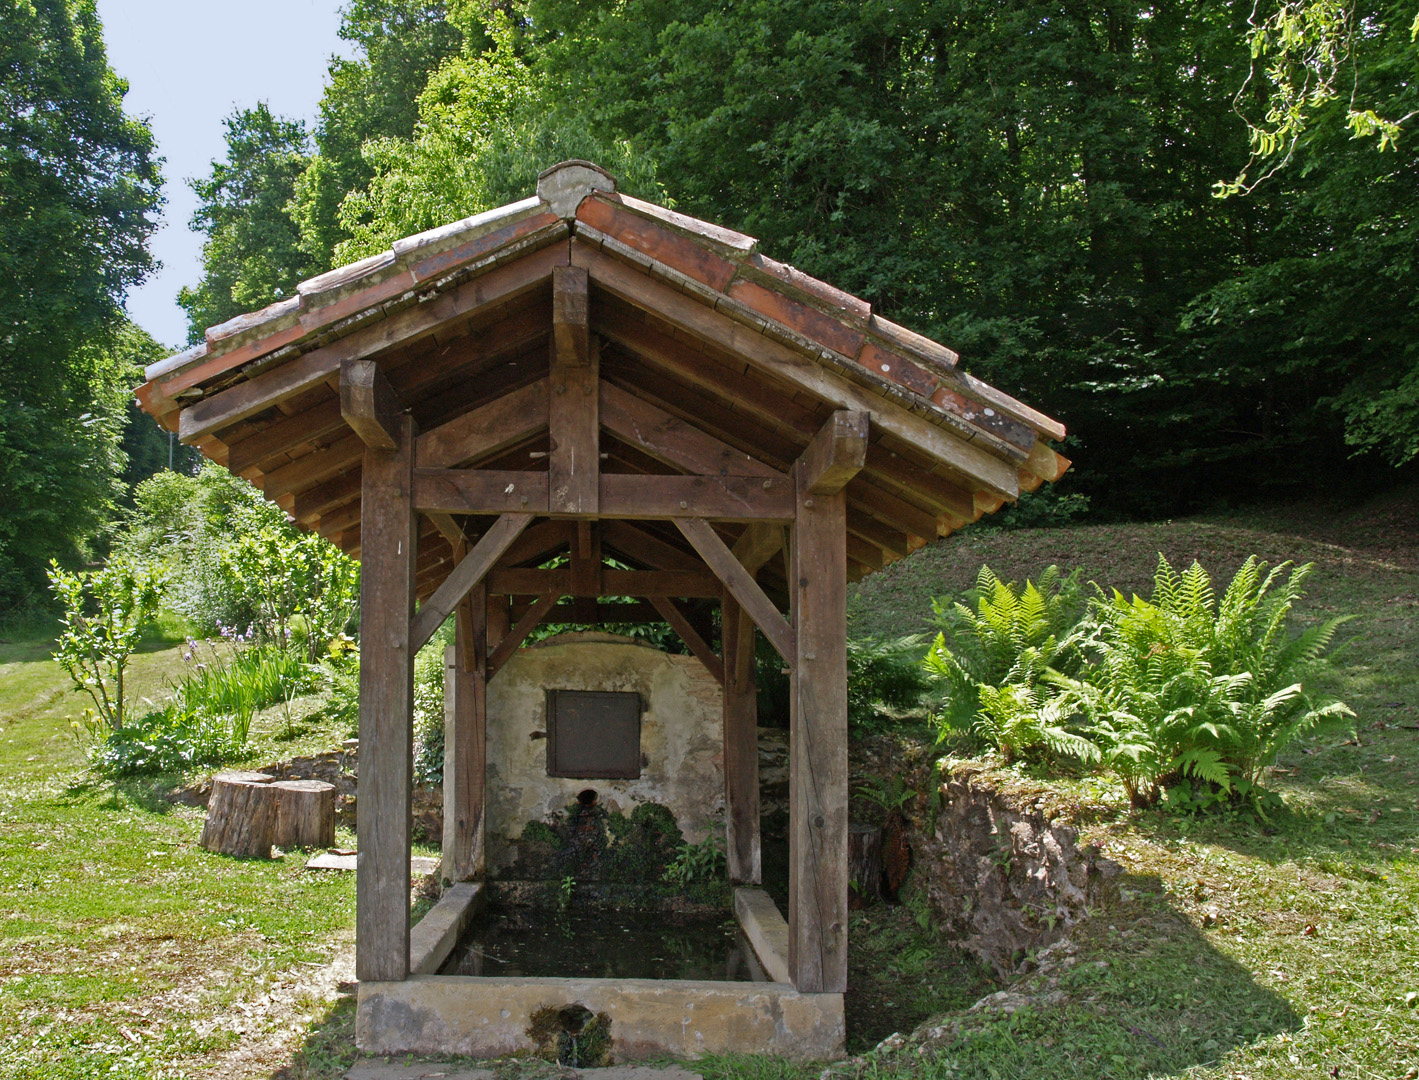  La Fontaine de Duhort-Bachen  --  Der Brunnen von Duhort-Bachen